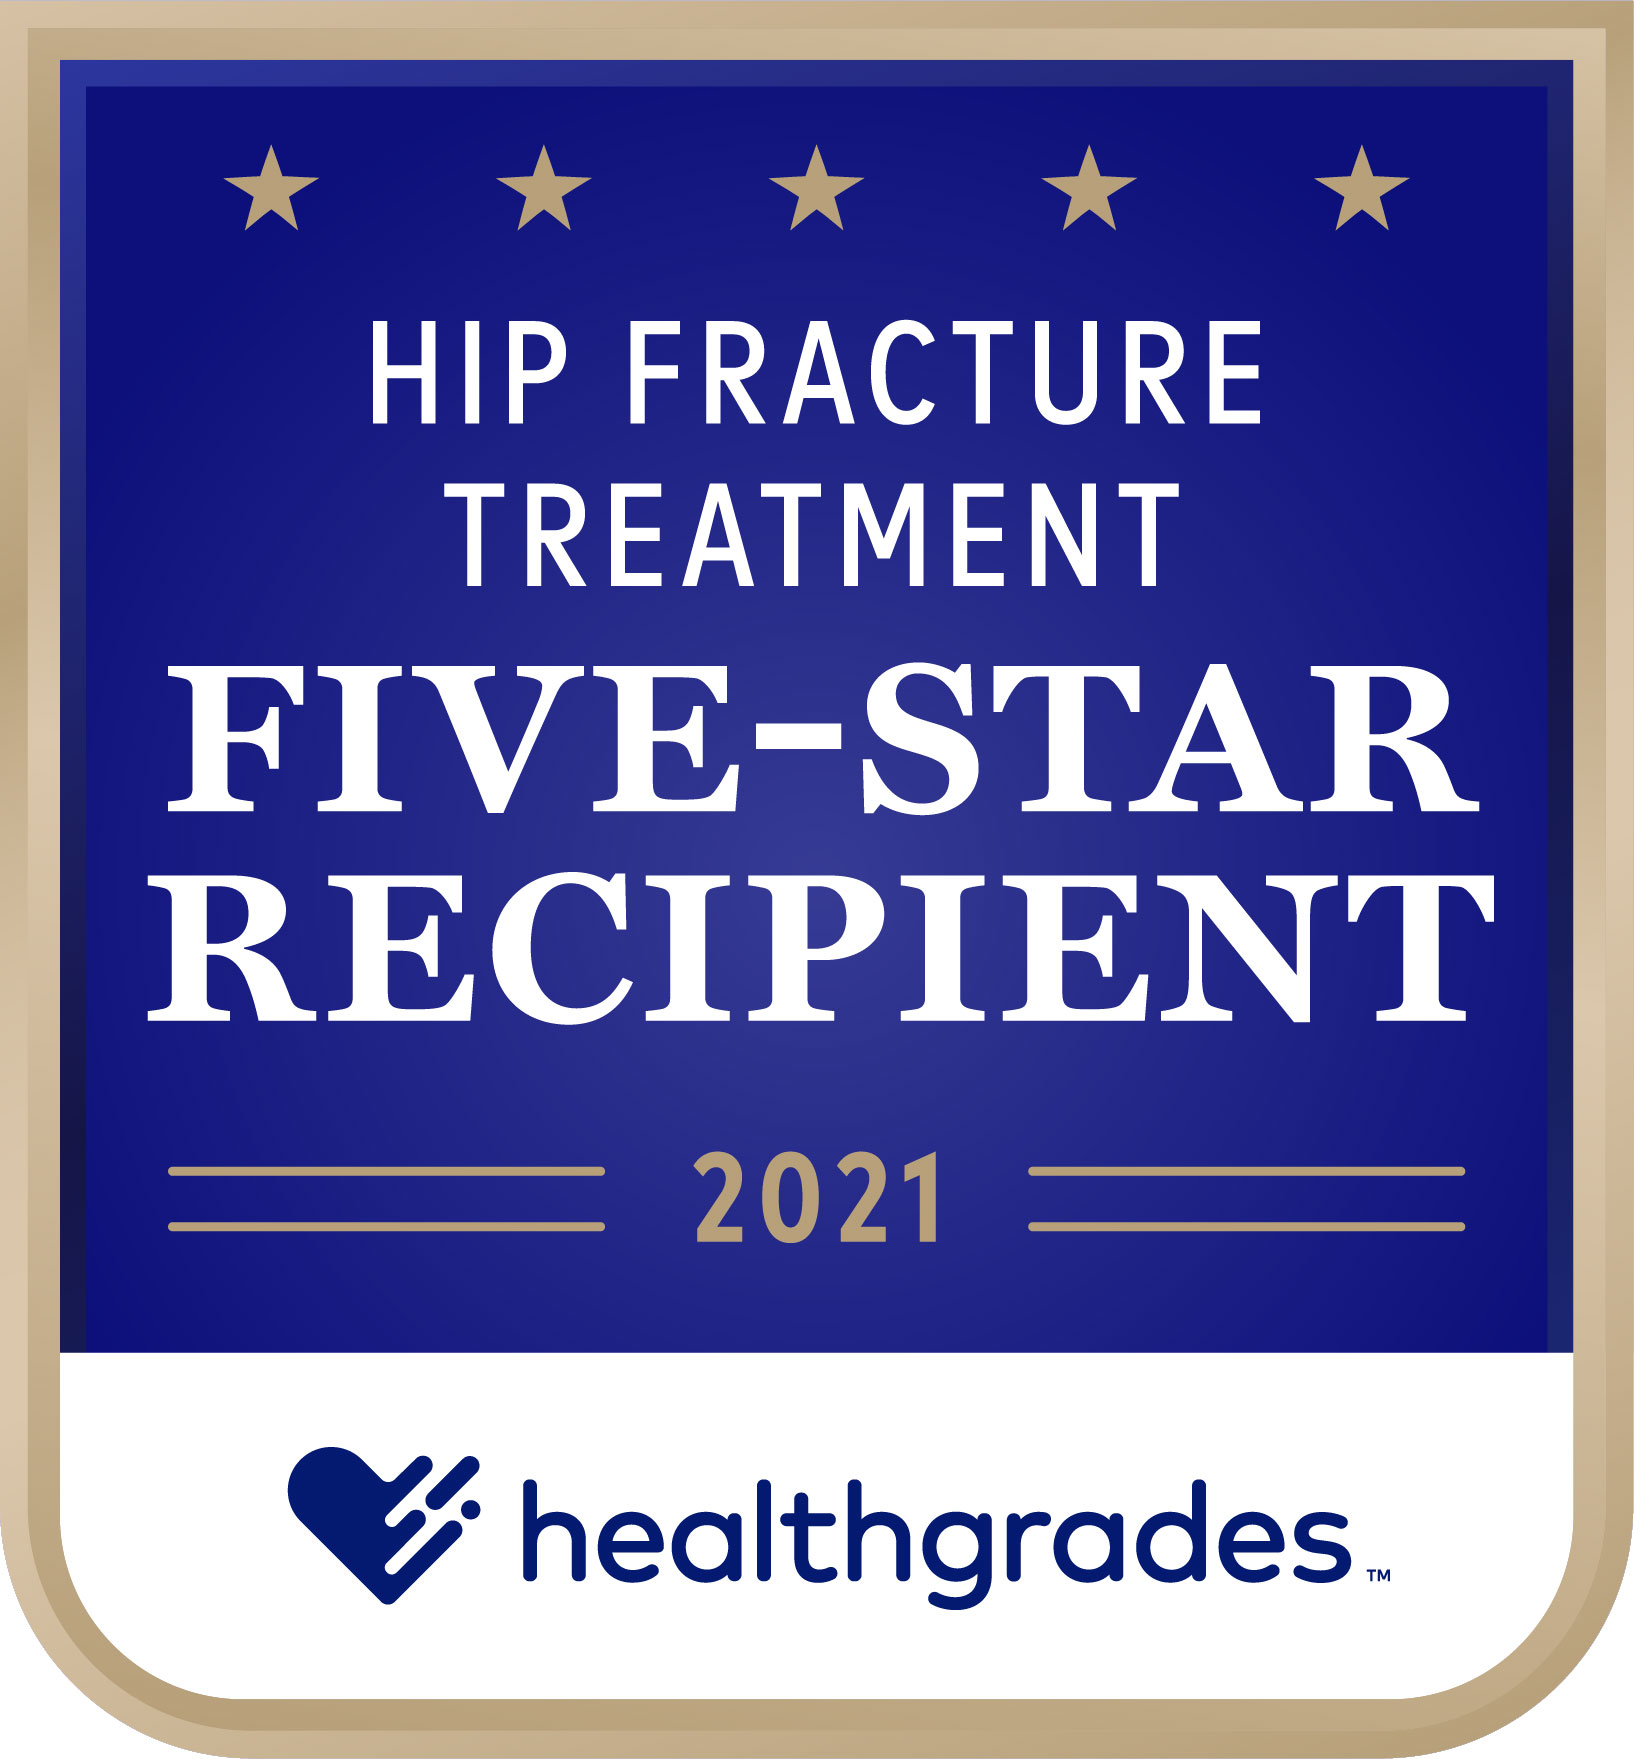 Healthgrades Hip Fracture Treatment Five-Star Recipient 2021